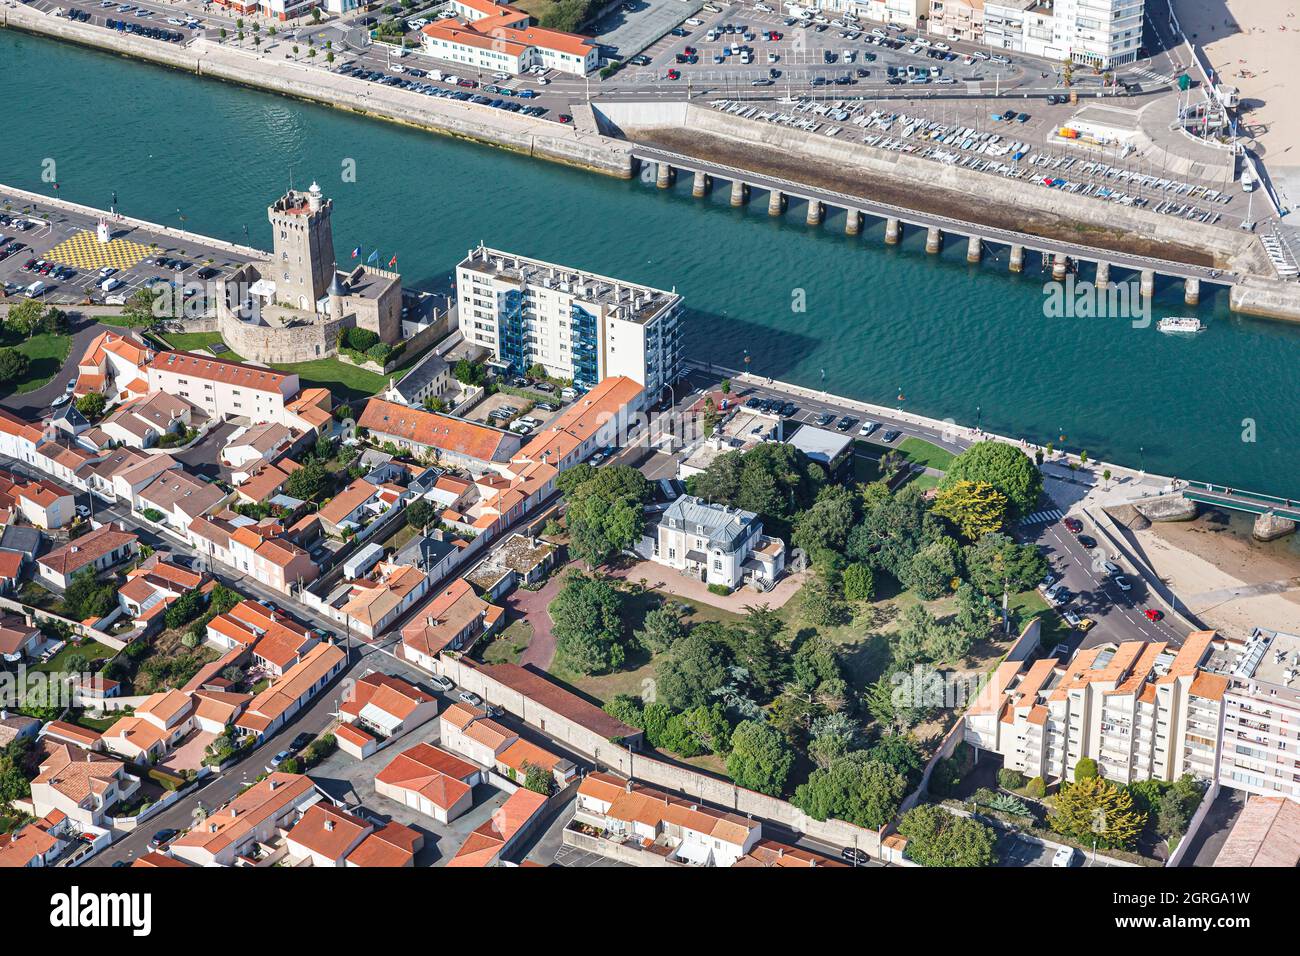 France, Vendee, Les Sables d'Olonne, la Villa Charlotte, la Tour d'Arundel and the channel leading to the harbour (aerial photography) Stock Photo